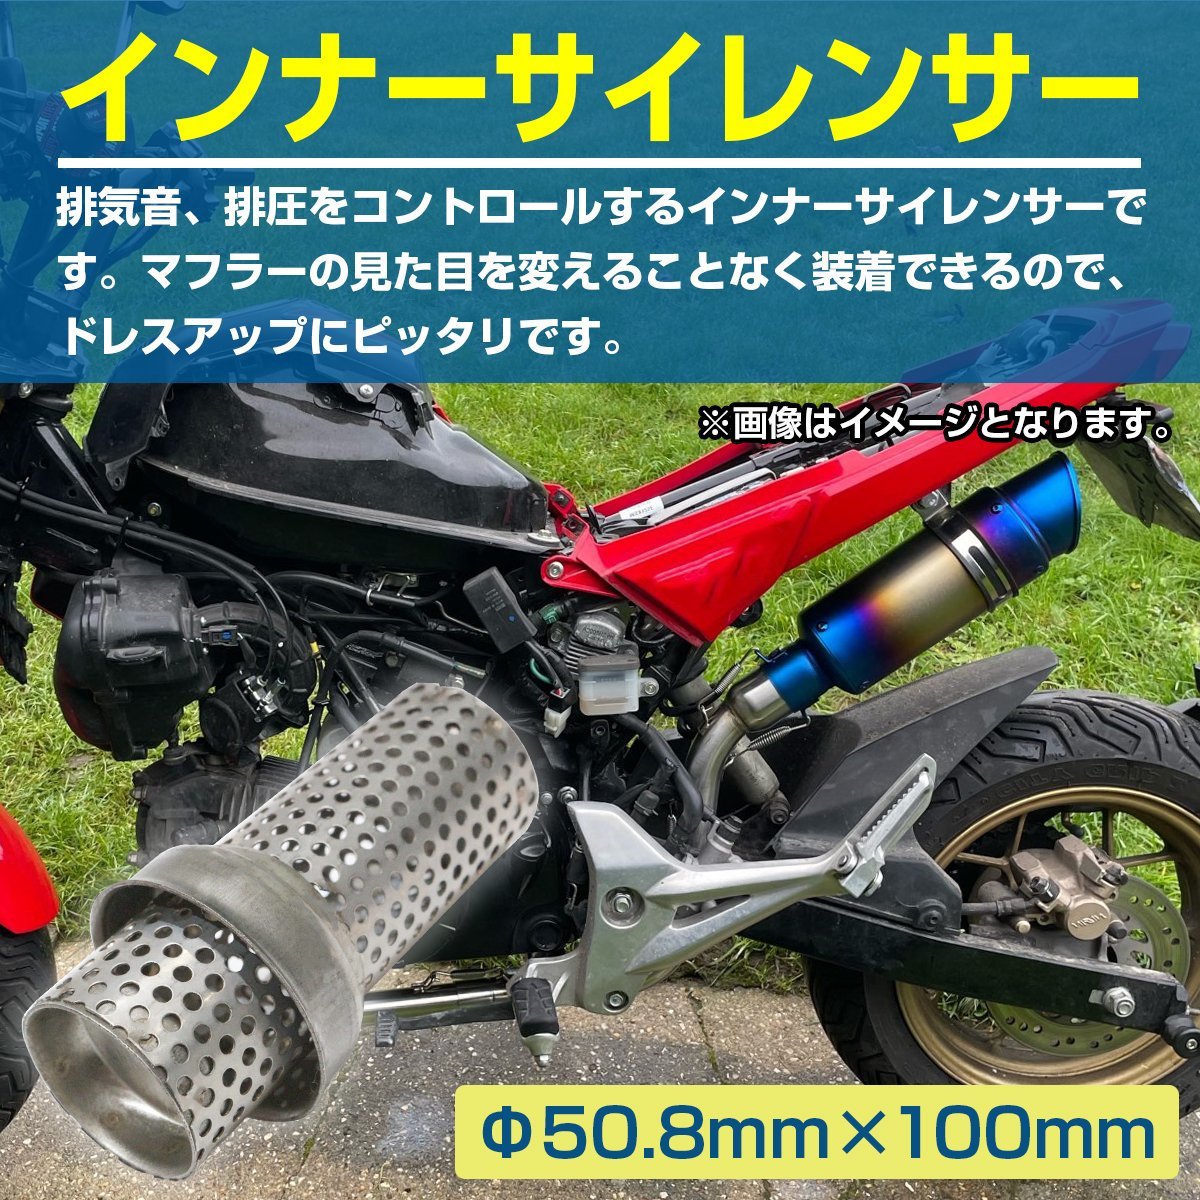 50.8mm 汎用 バイク インナー サイレンサー 100mm/50.8 インナー バッフル 消音 排気 音量調整 ステンレス製 マフラー_bik-a-024-c-01-s